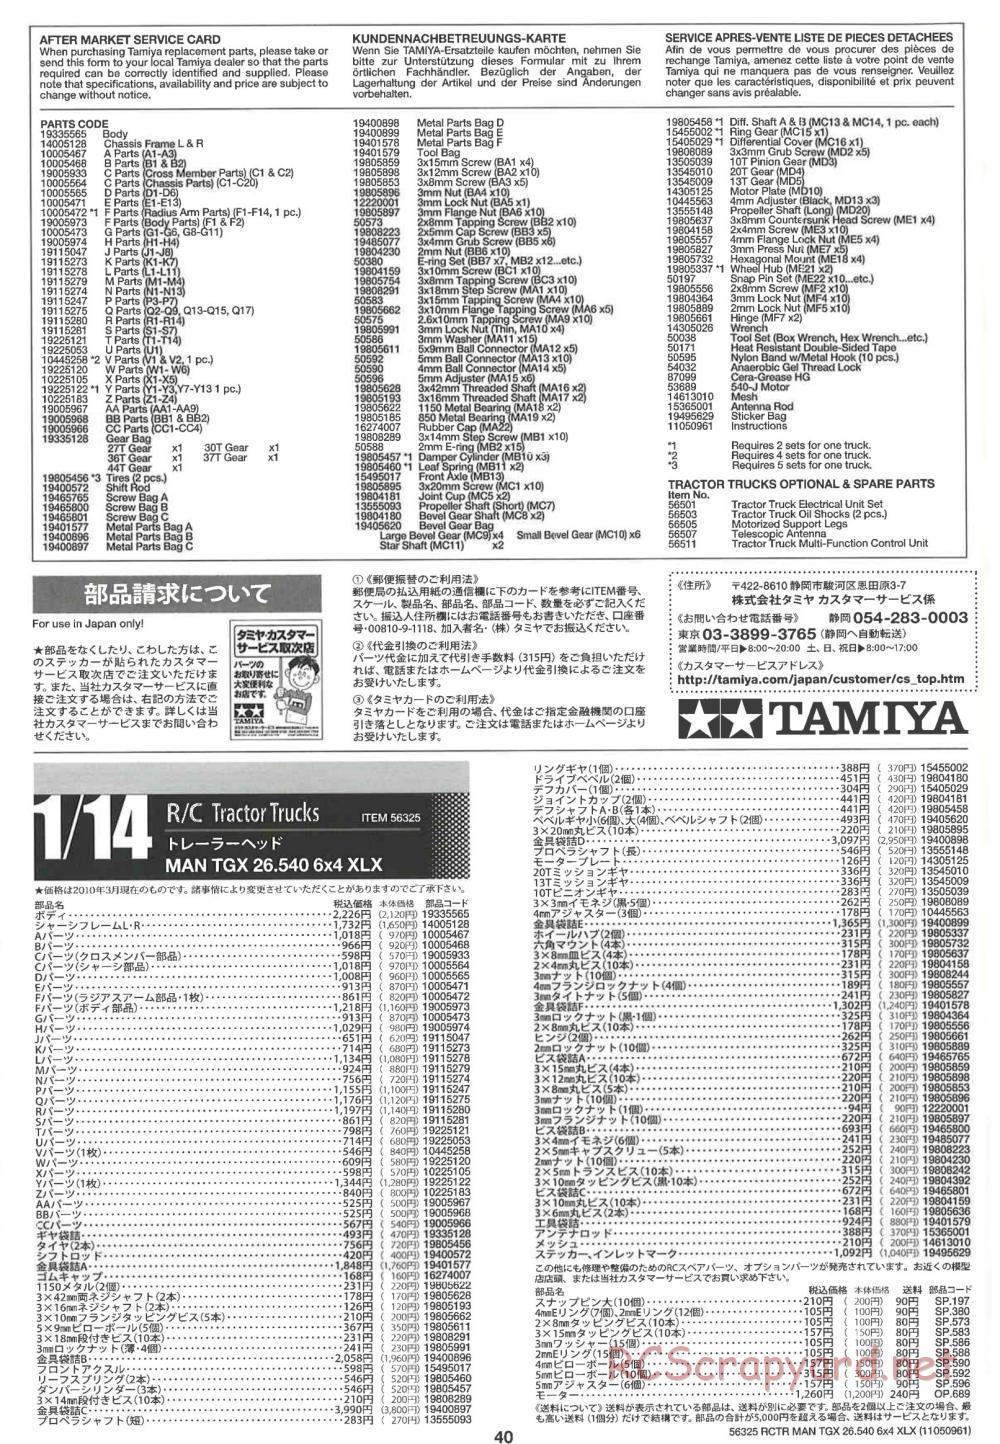 Tamiya - MAN TGX 26.540 6x4 XLX Tractor Truck Chassis - Manual - Page 40